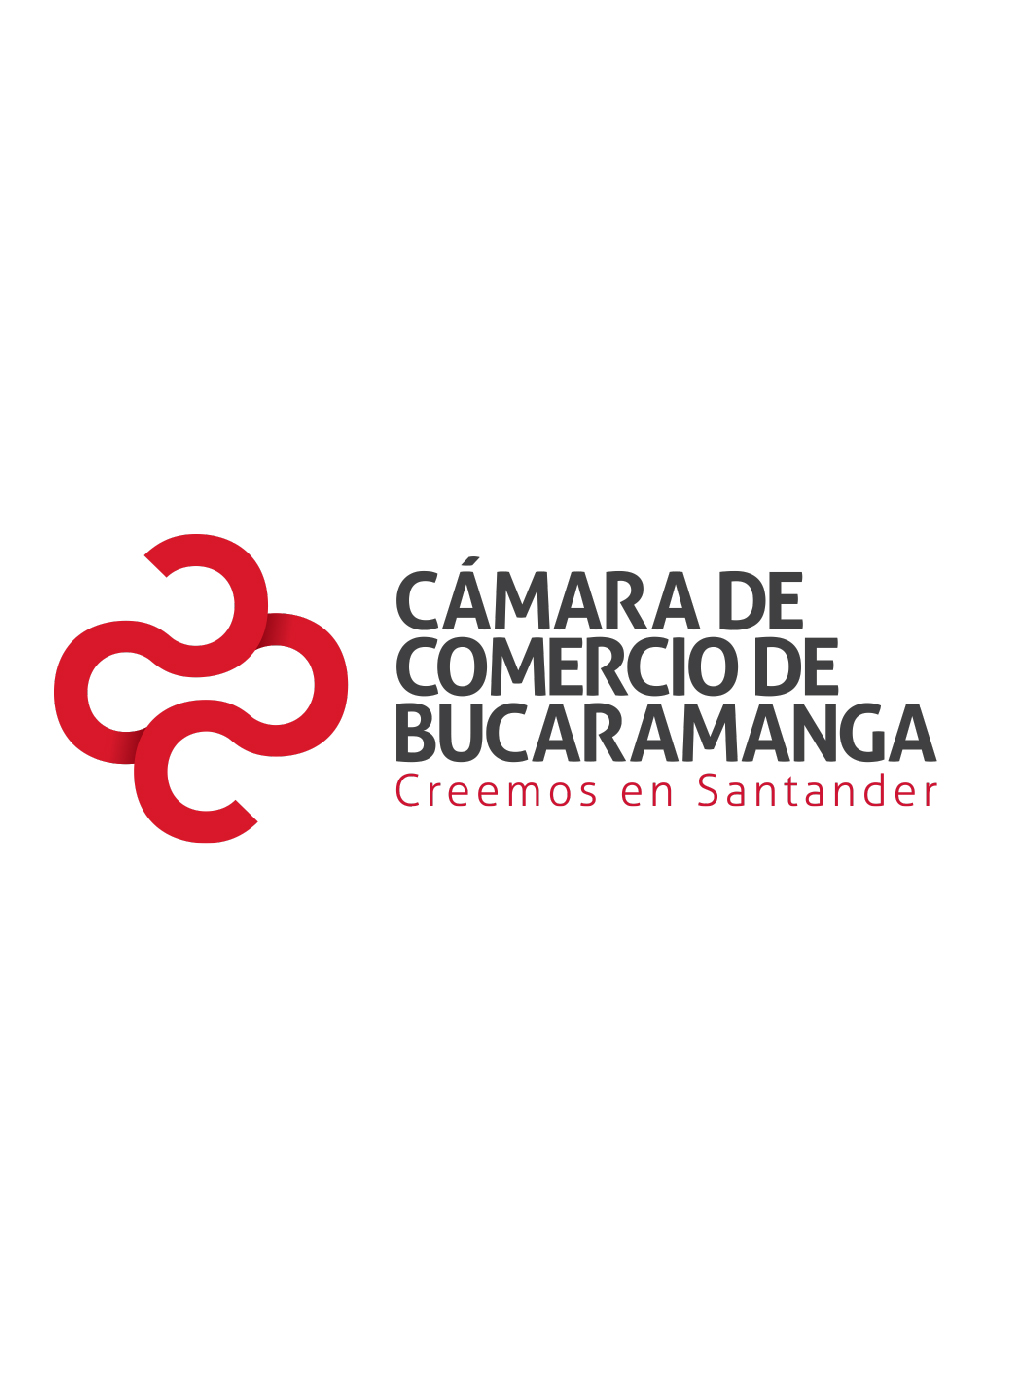 Cacao en provincias de Santander - Censo Nacional Agropecuario 2014